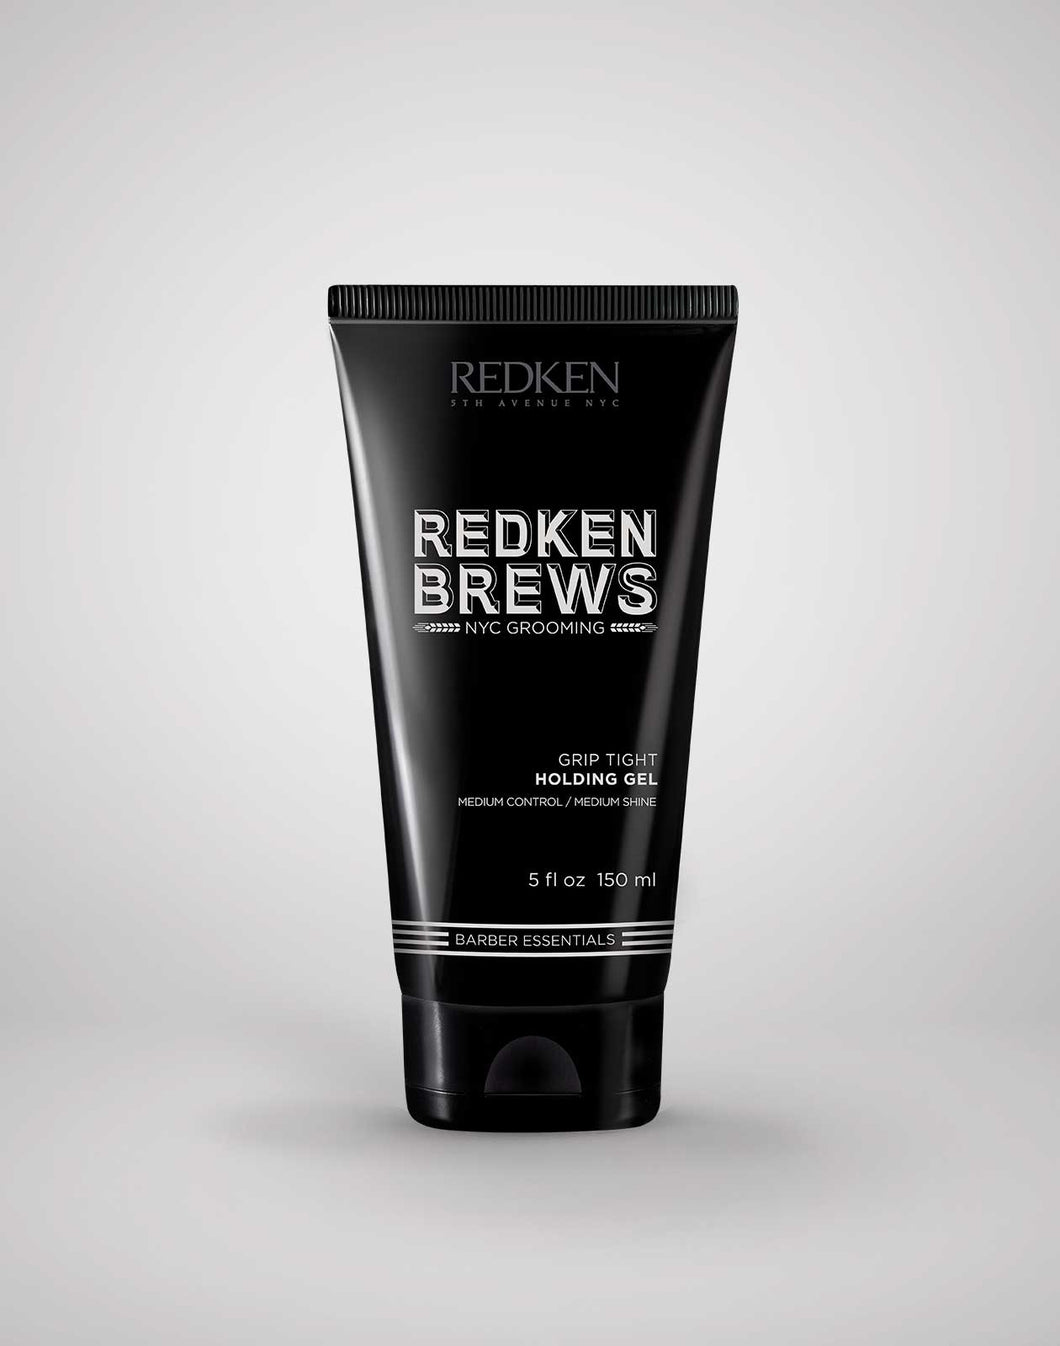 REDKEN- Brews Grip Tight